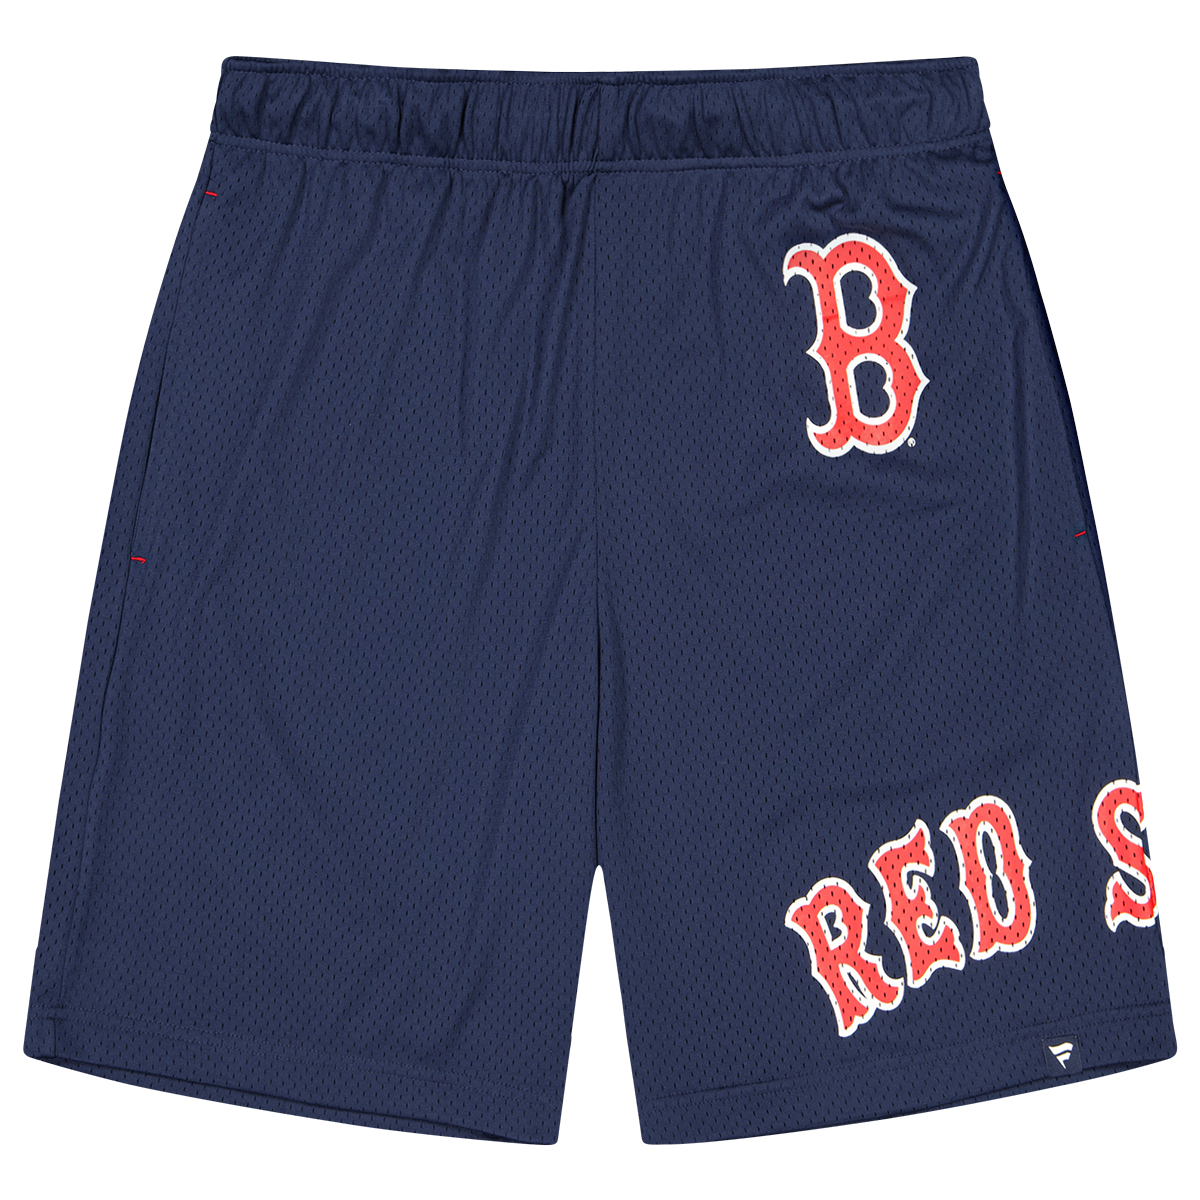 Image of Fanatics MLB Boston Red Sox Fundamentals Mesh Shorts, Athletic Navy/athletic Red